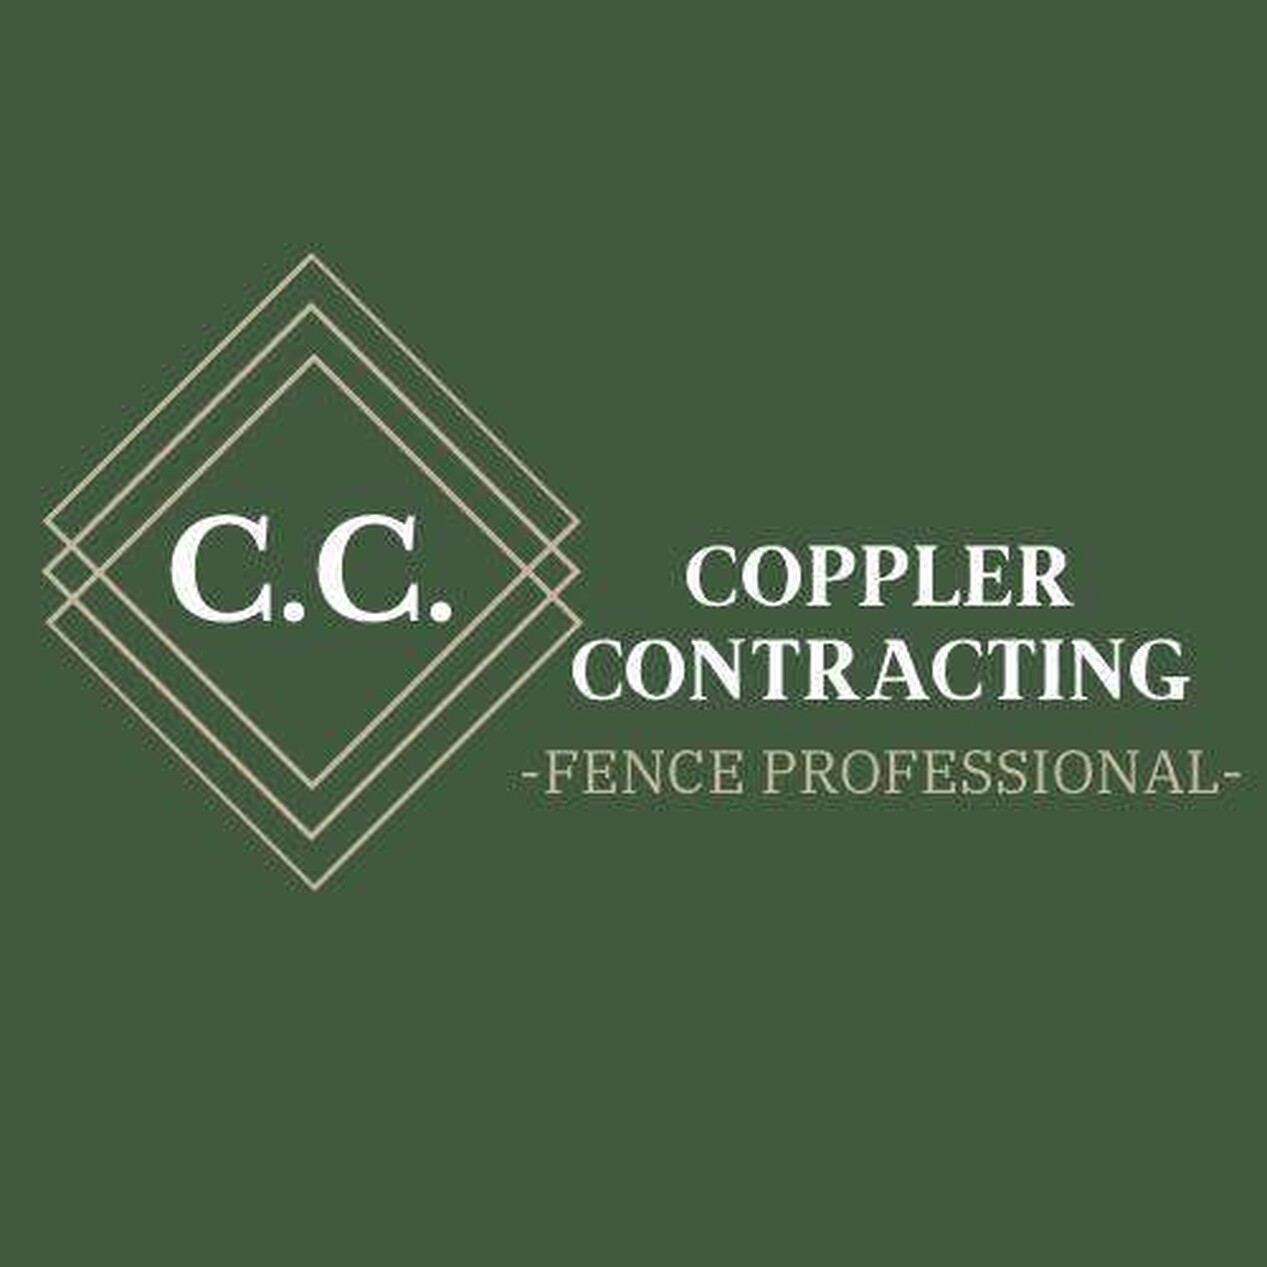 Coppler Contracting